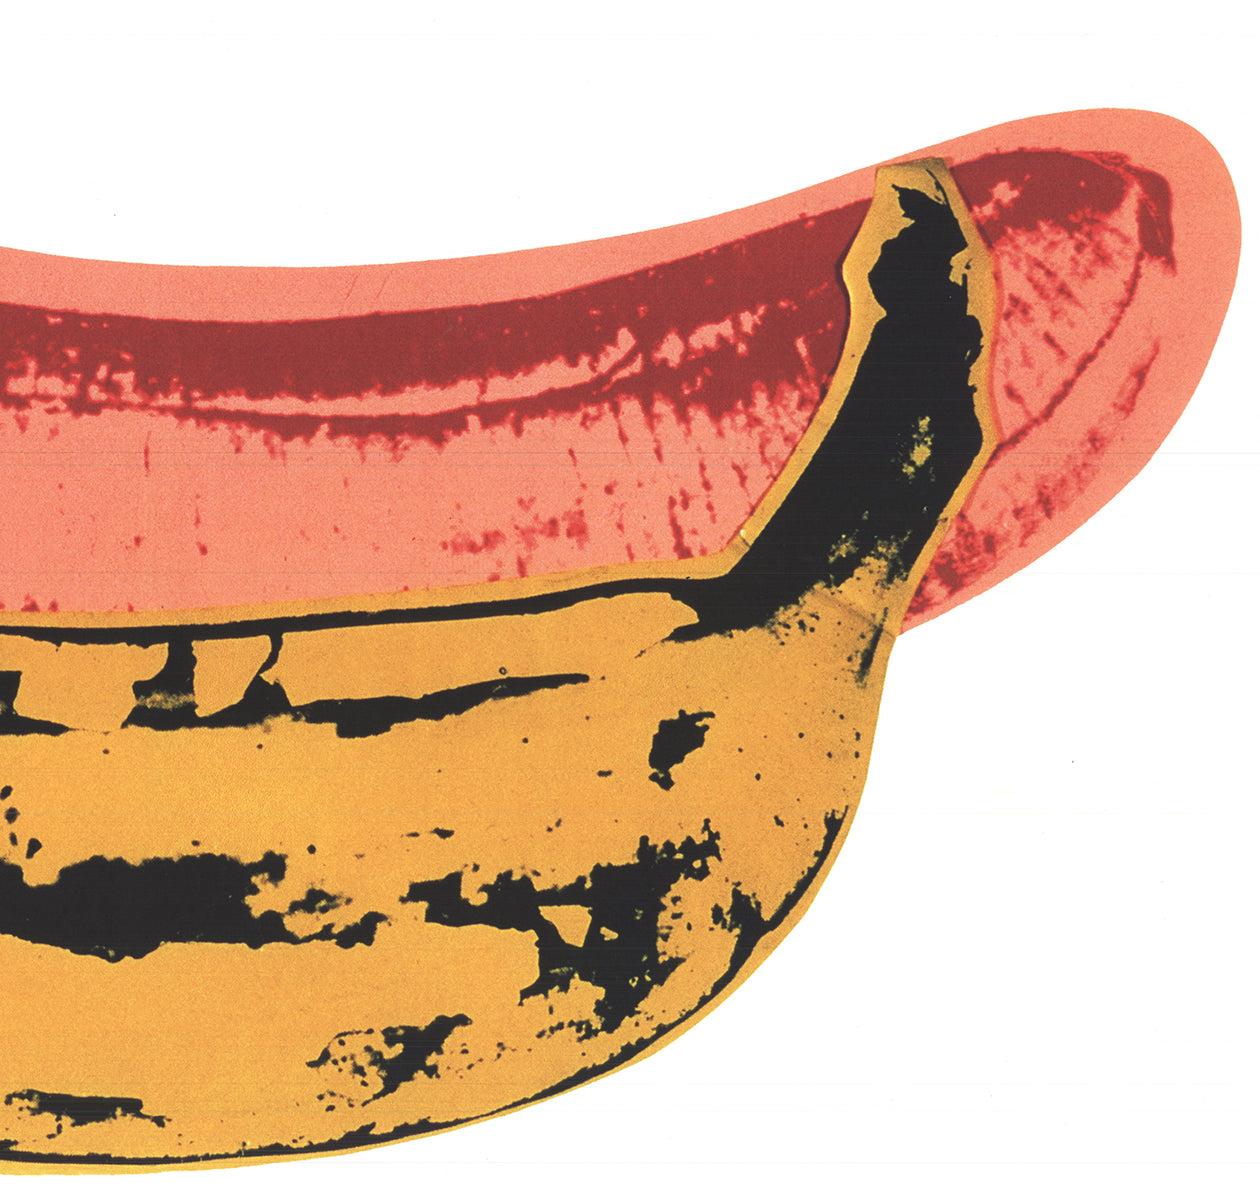 Andy Warhol 'Banana' 2010- Offset Lithograph For Sale 3